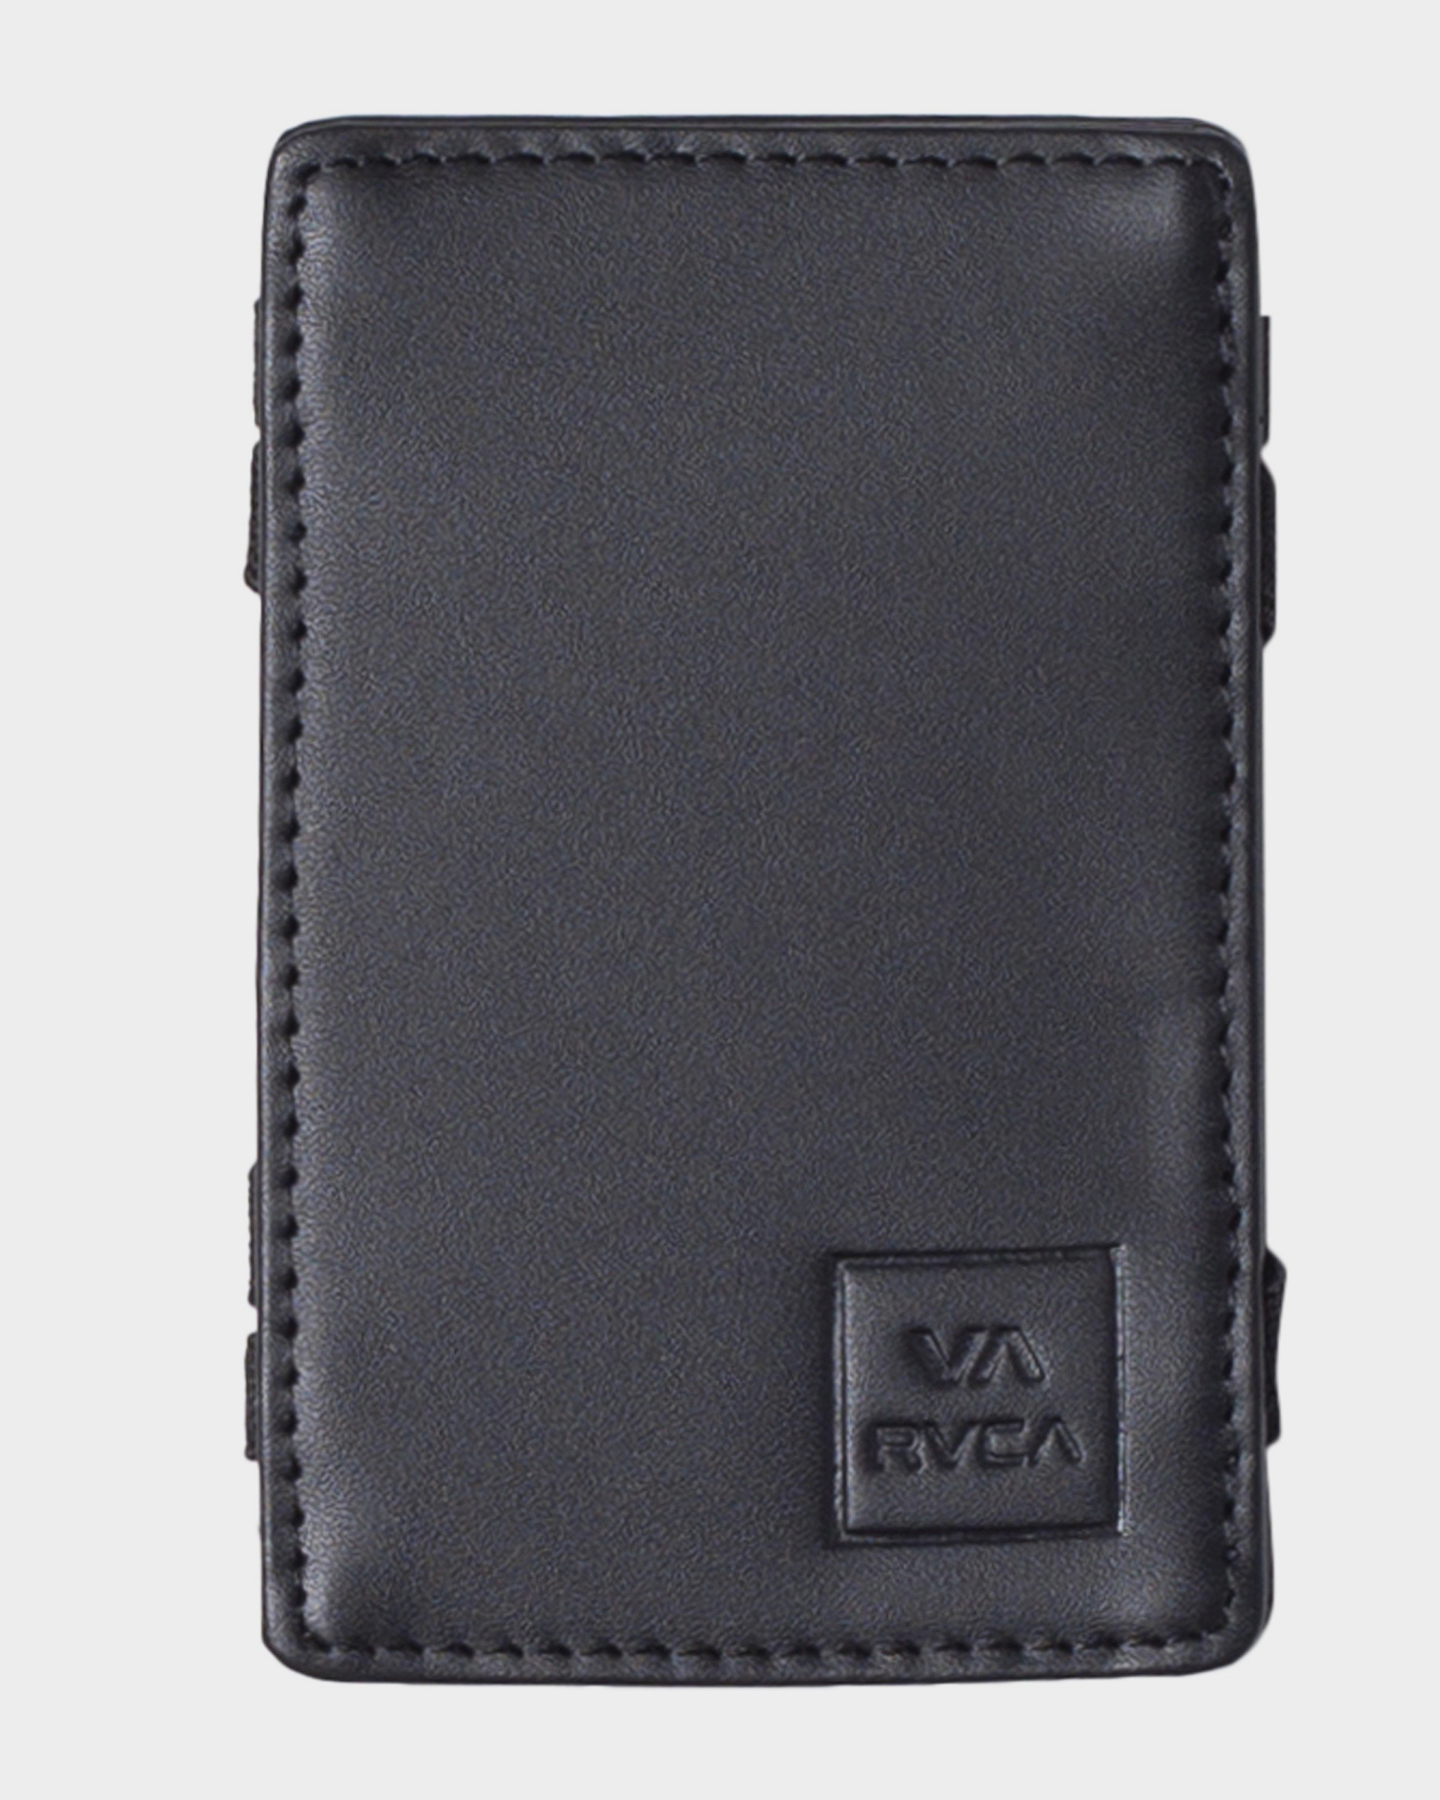 Rvca Magic Card Wallet - Black | SurfStitch